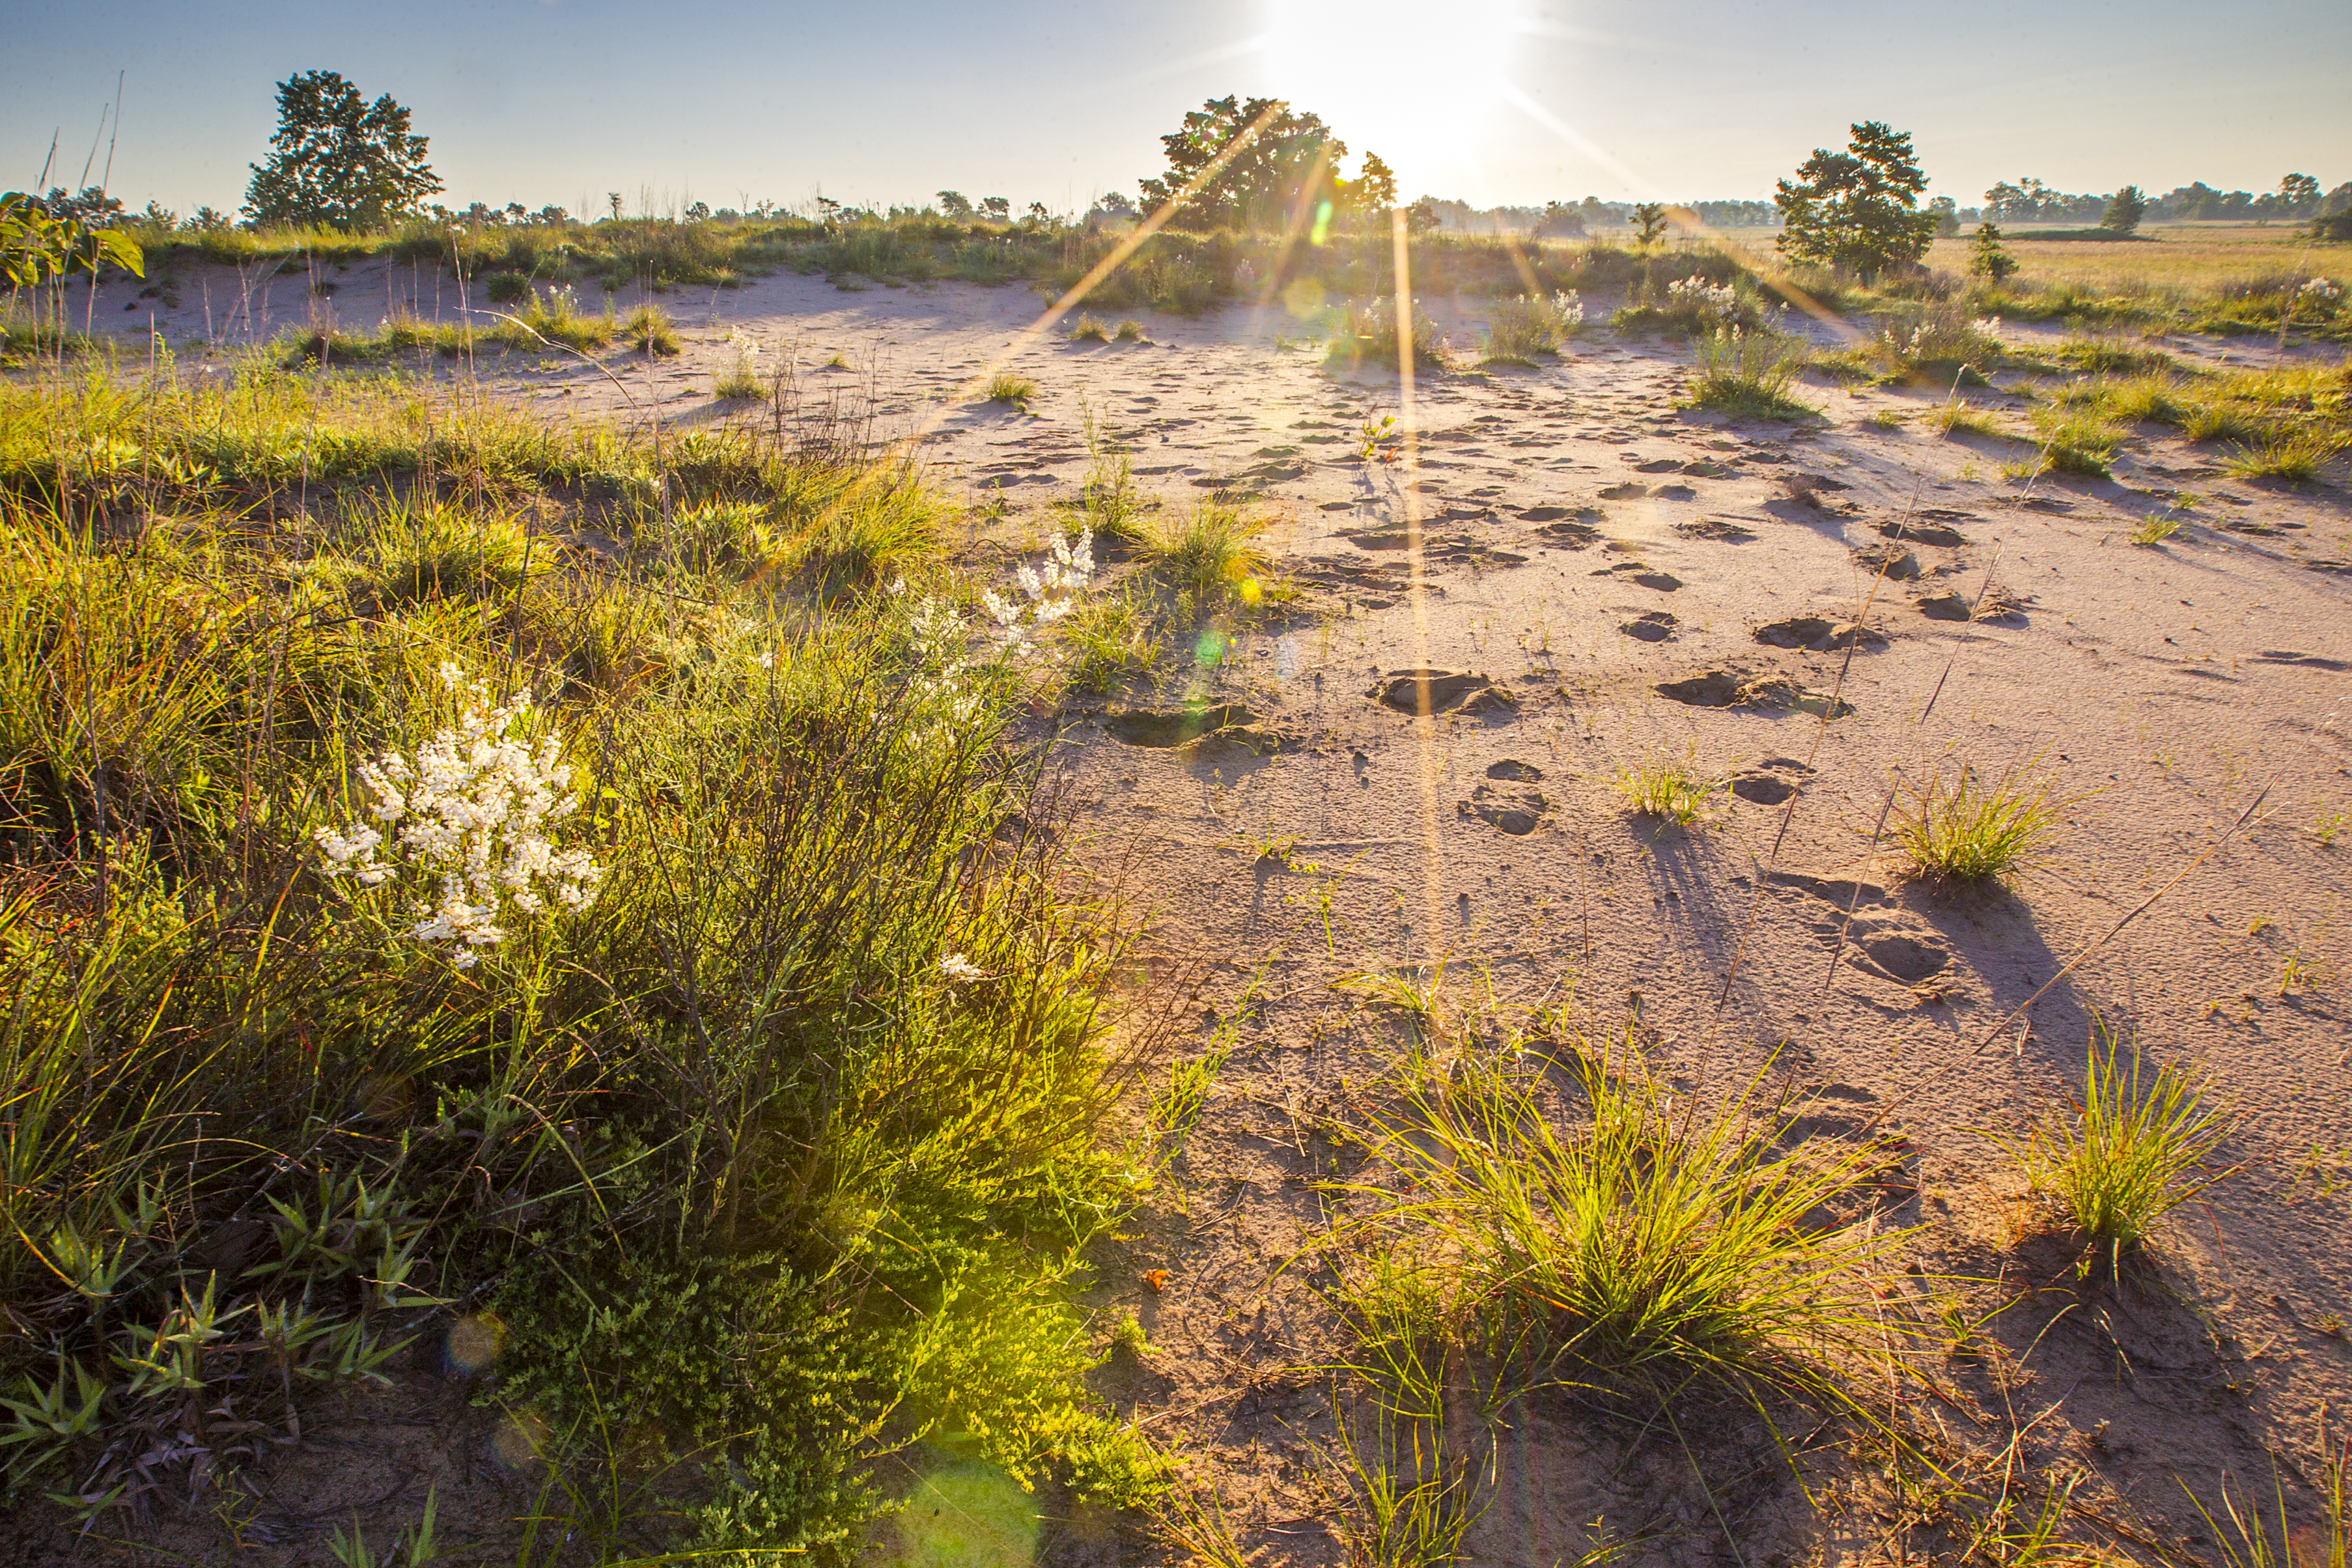 Sand Prairie Conservation Area